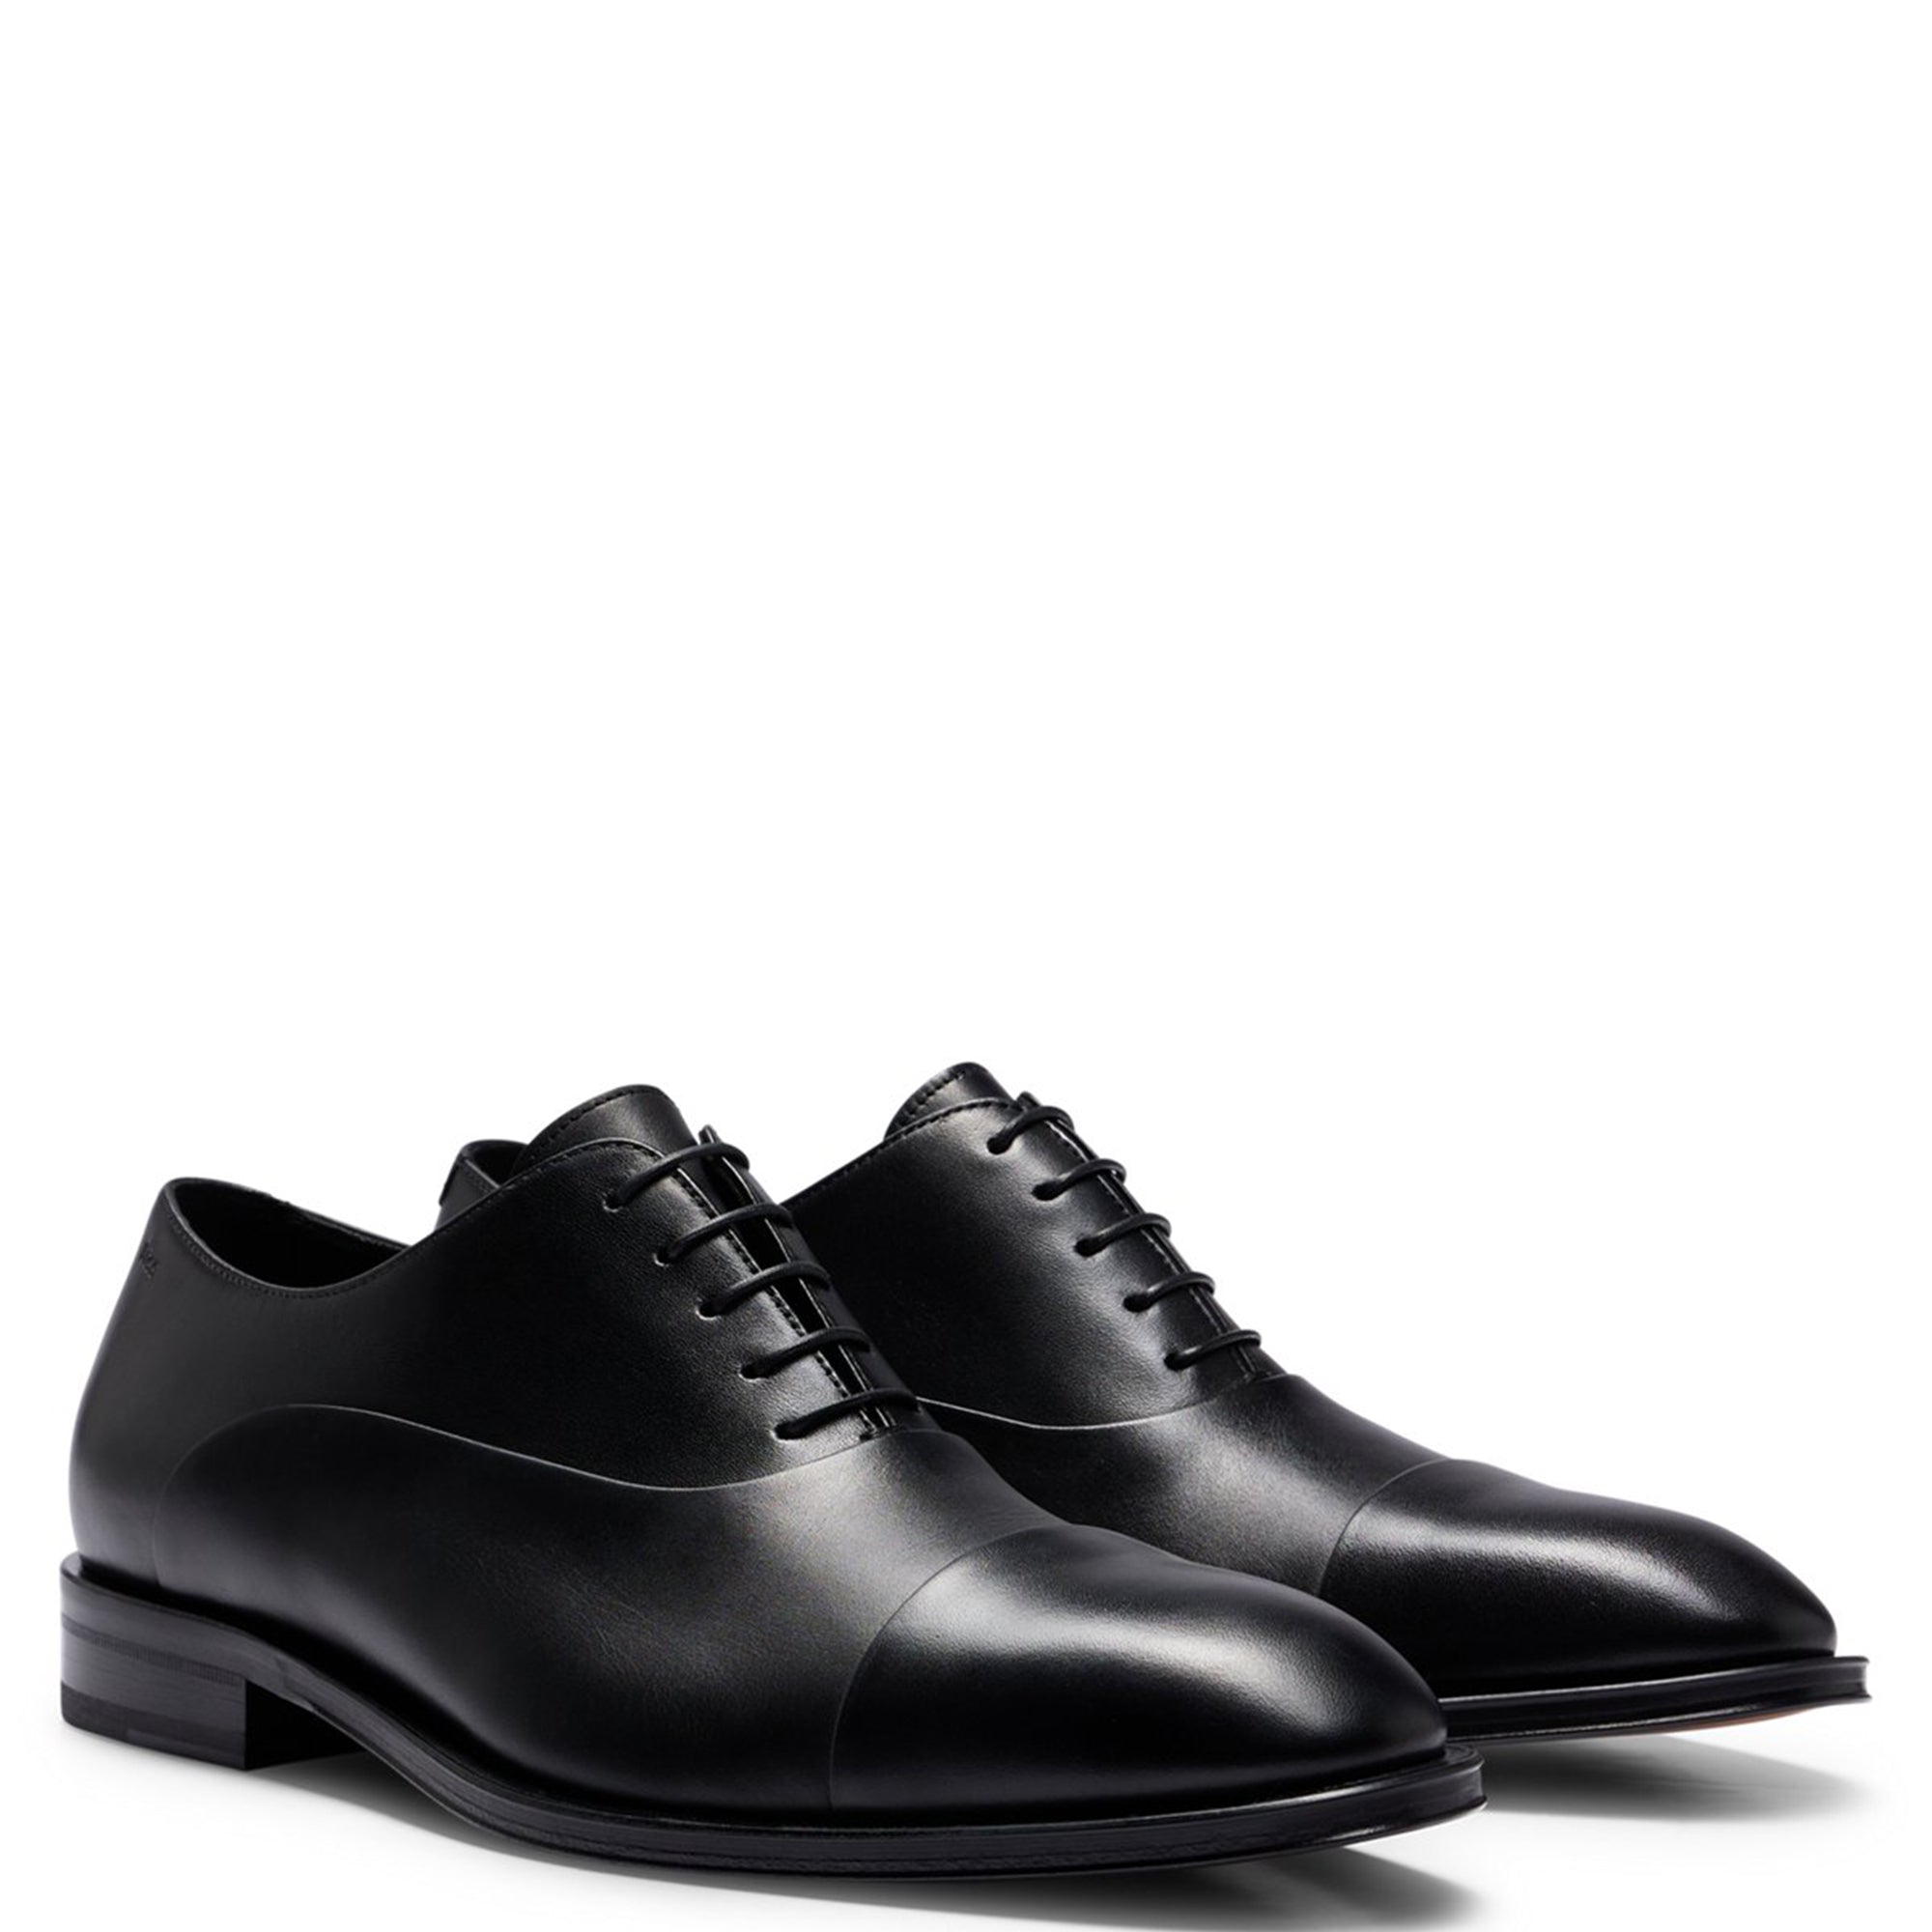 Boss Derrek Oxford Shoes Black UK 9